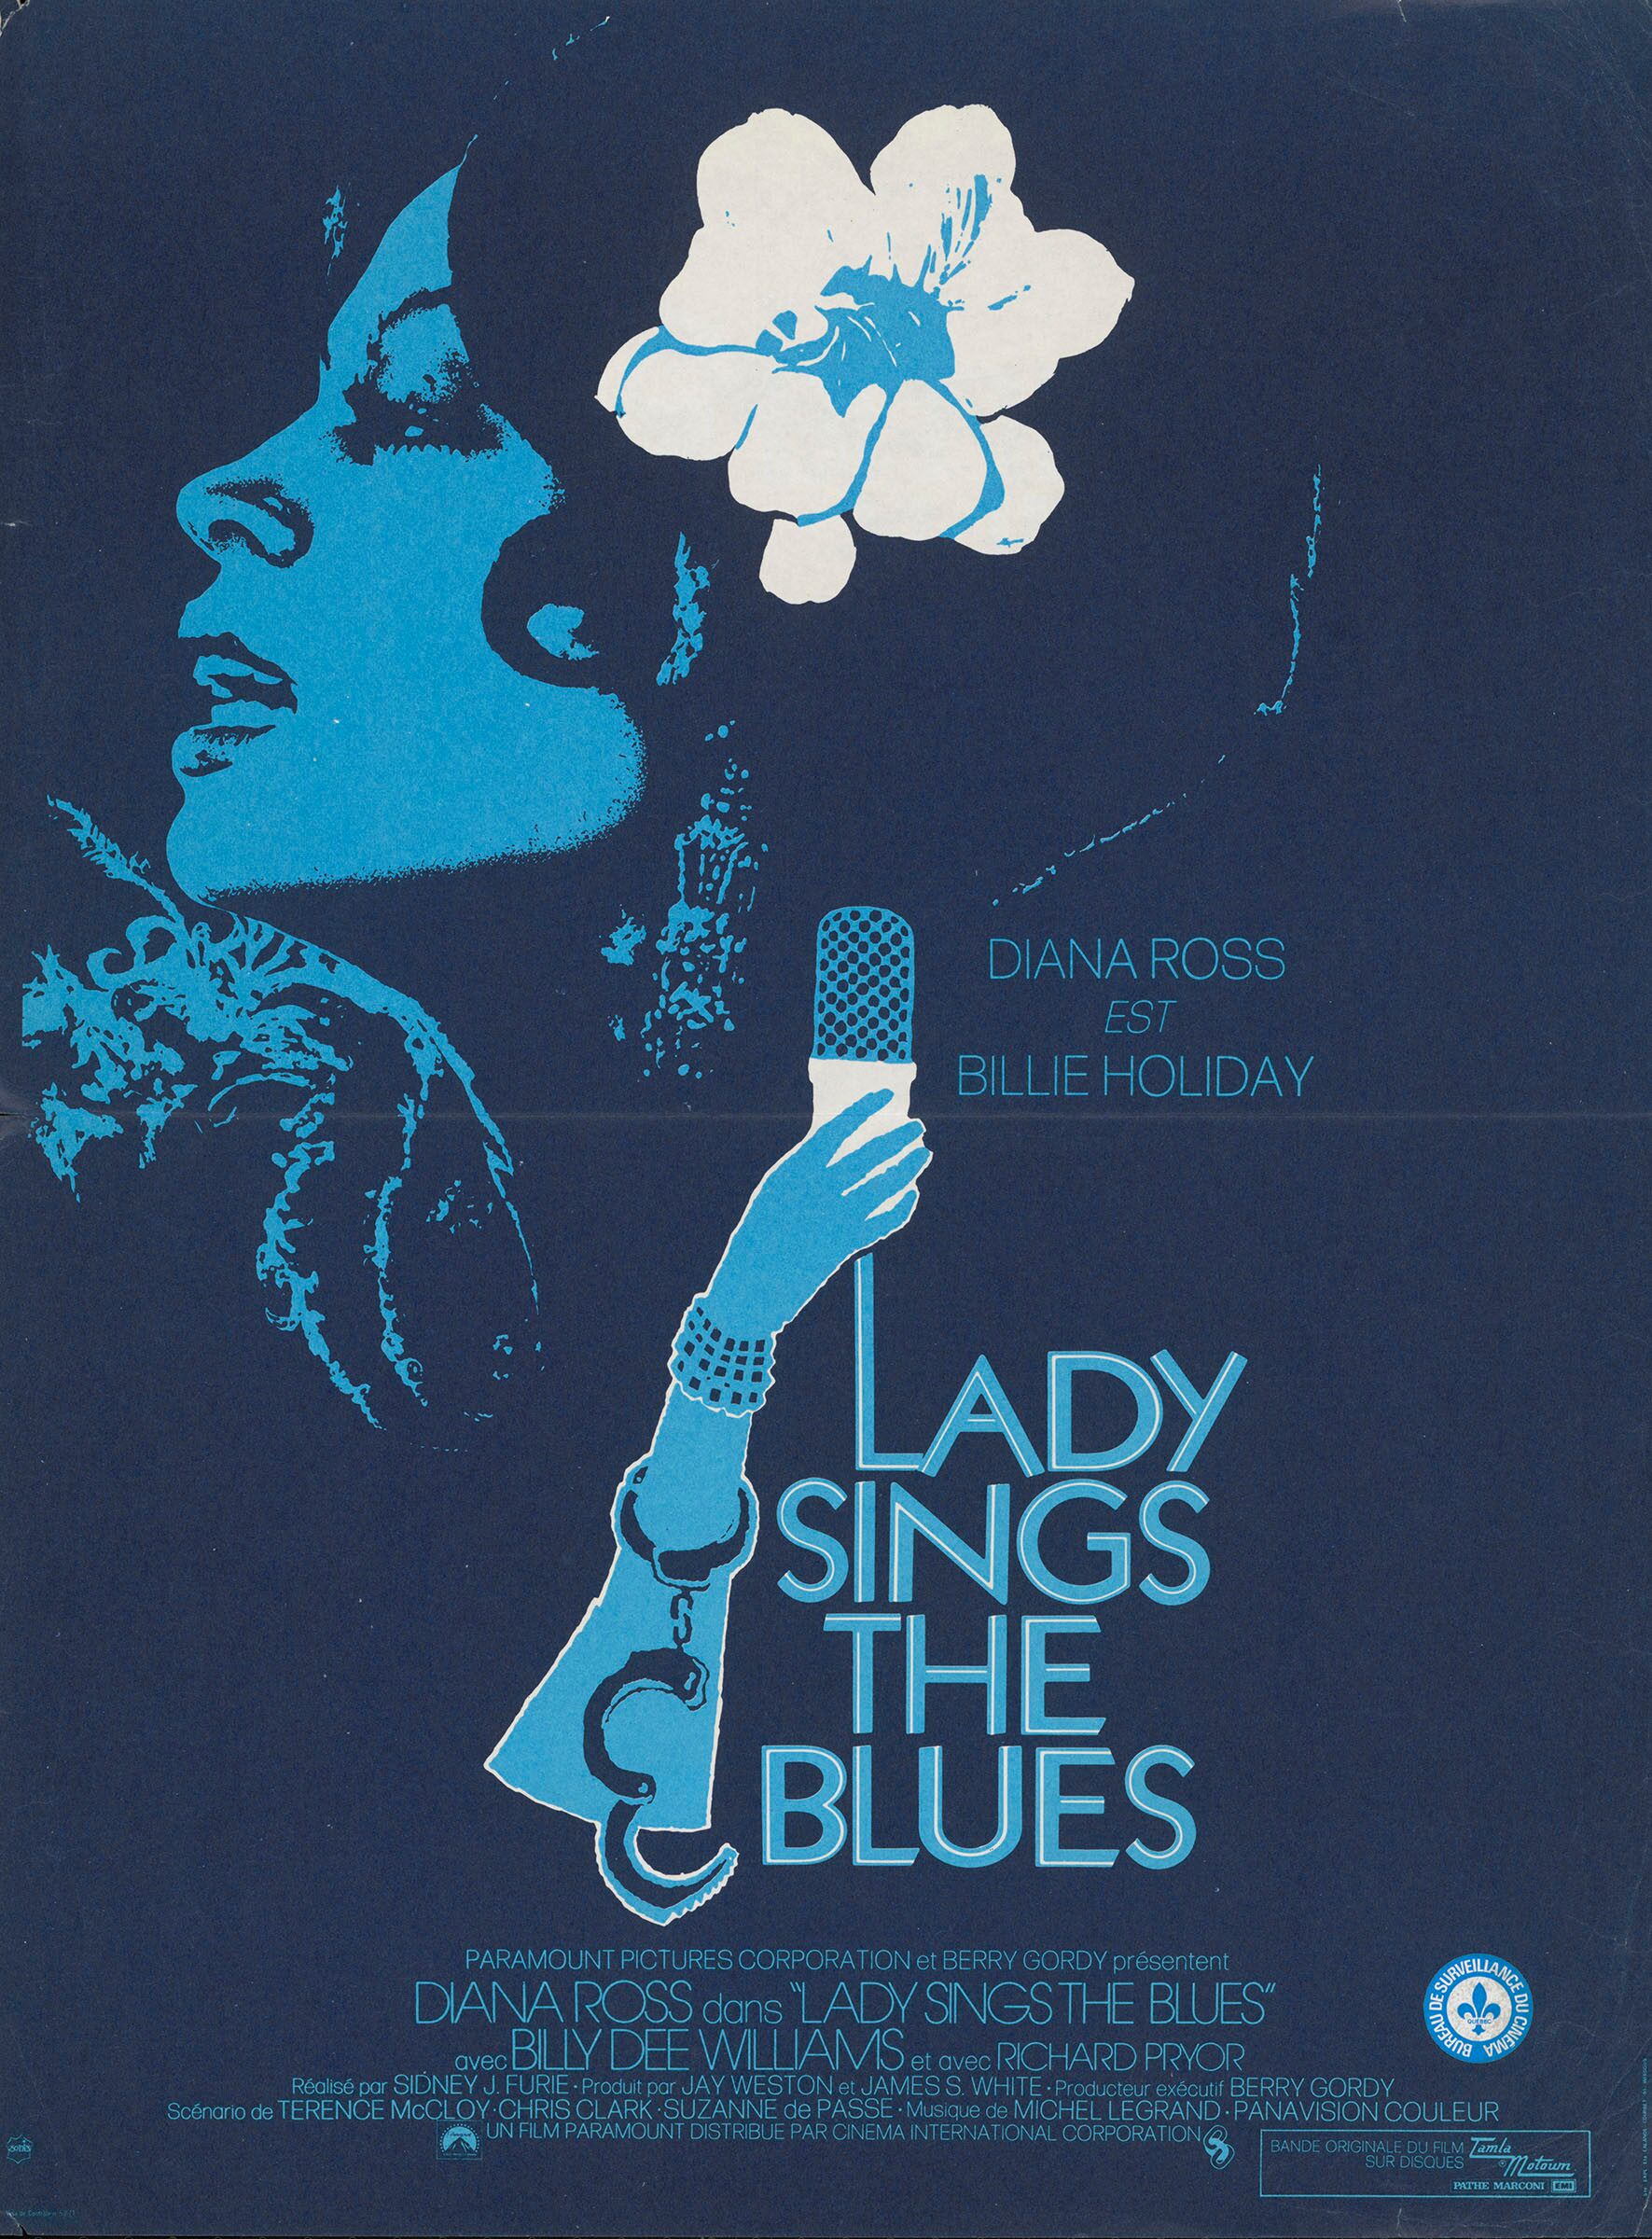 Singing the blues. Леди поёт блюз. Lady Sings the Blues. Блюз афиша. Билли Холидей Постер.